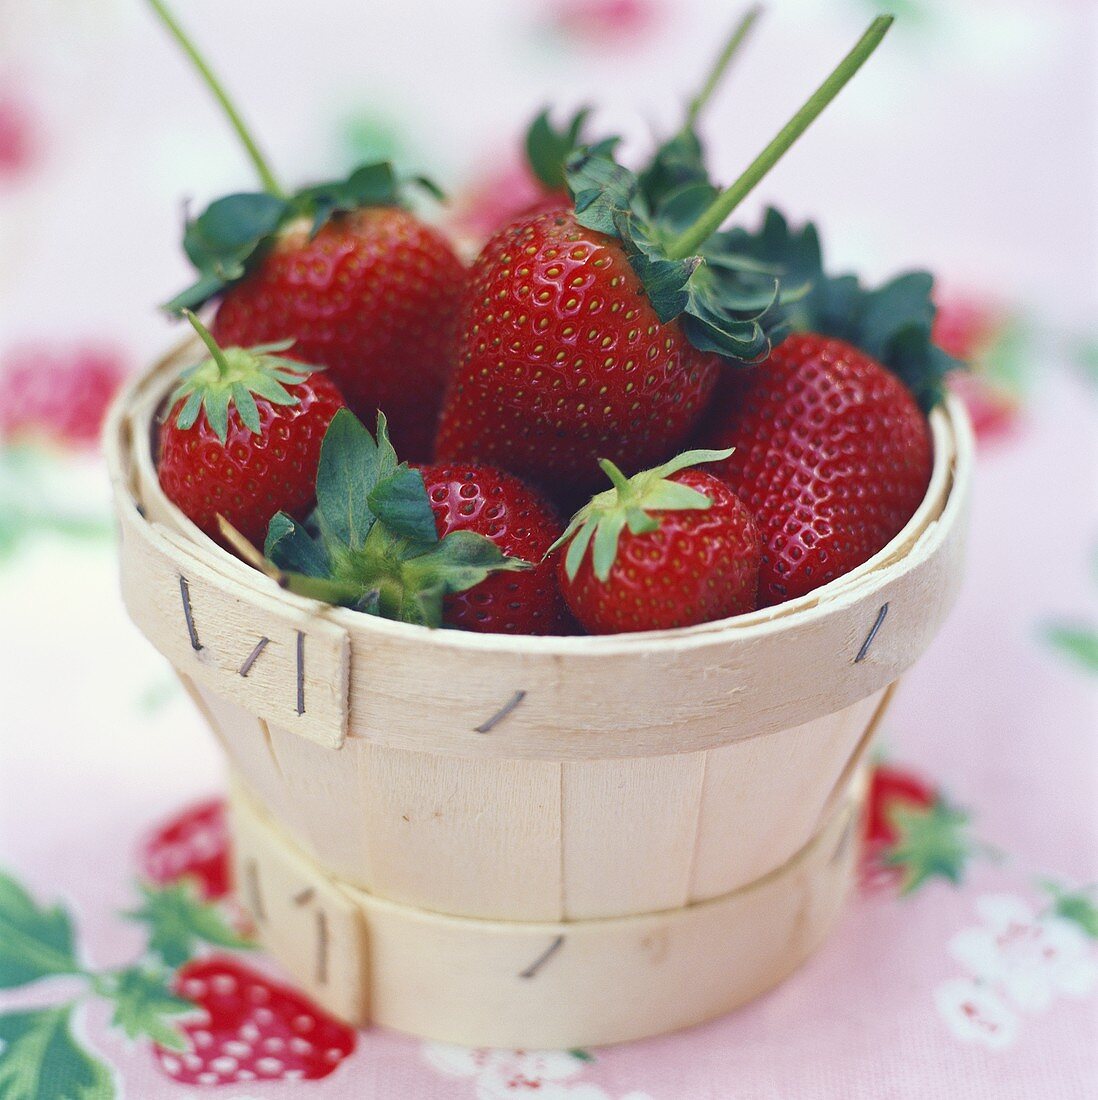 Small basket of fresh strawberries